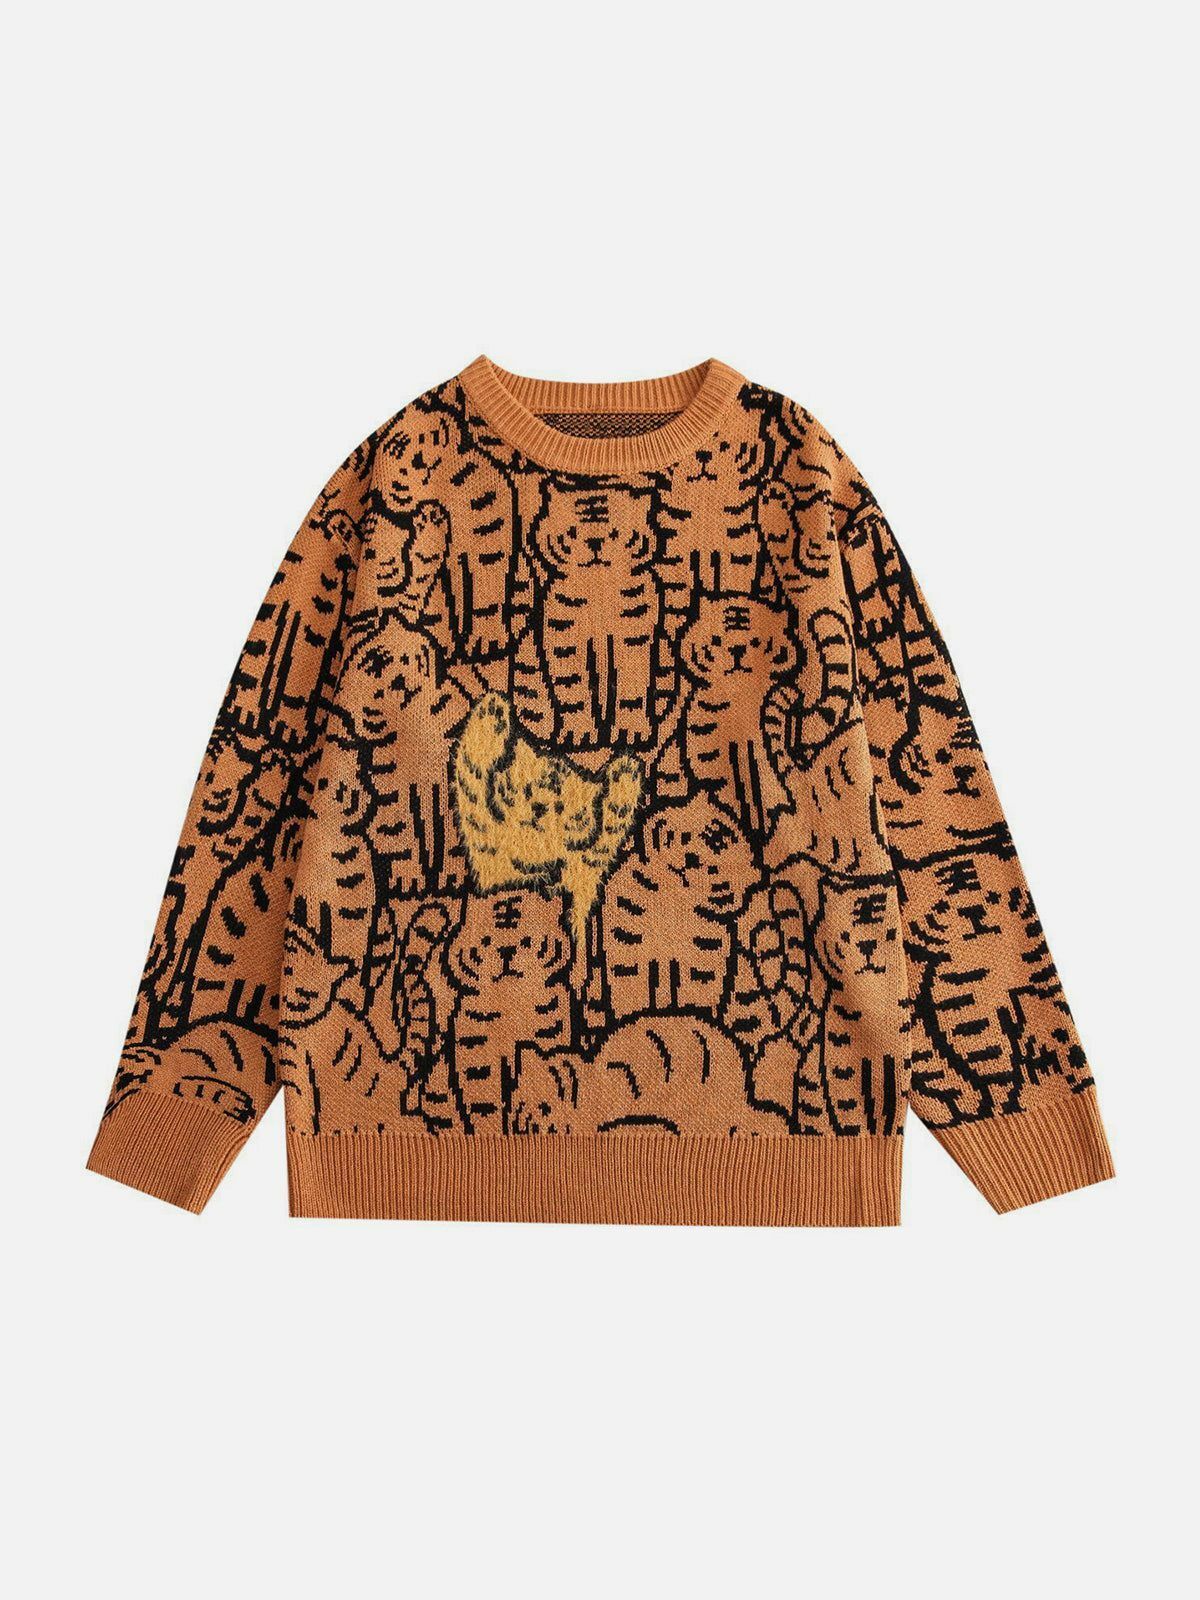 tiger print knit sweater edgy y2k fashion icon 3941